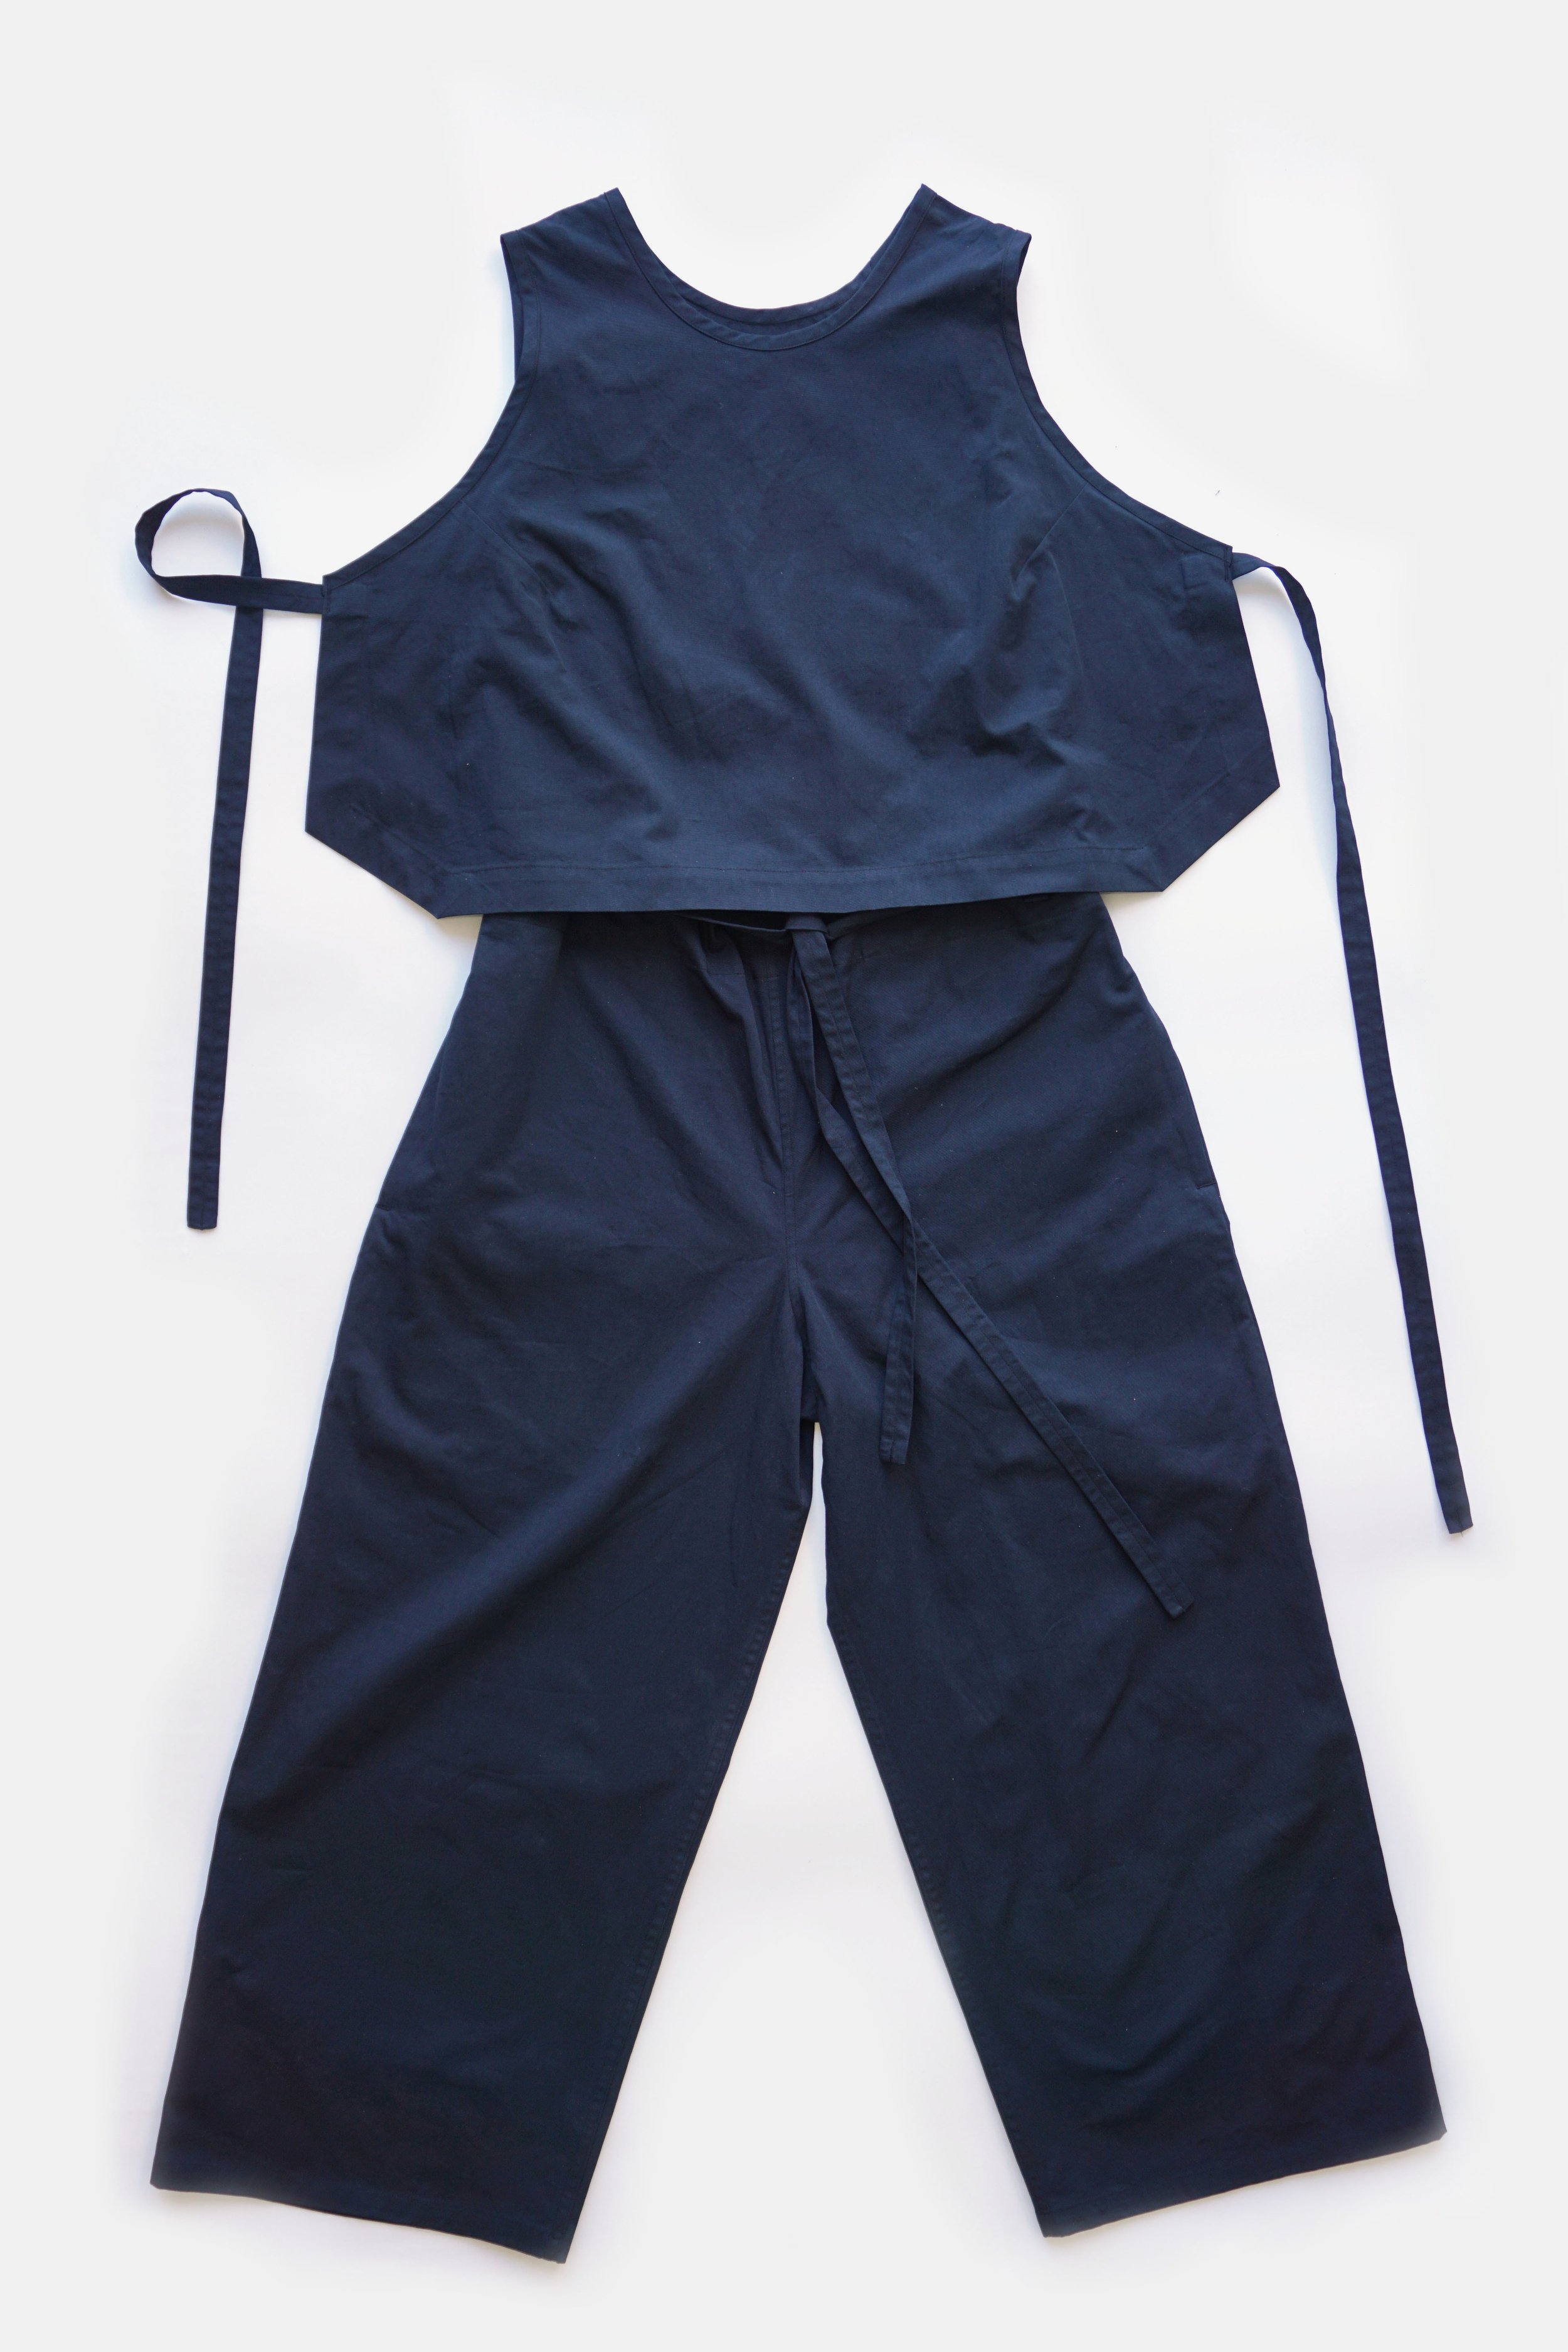 ritual body jumpsuit flat 1 grey.jpg